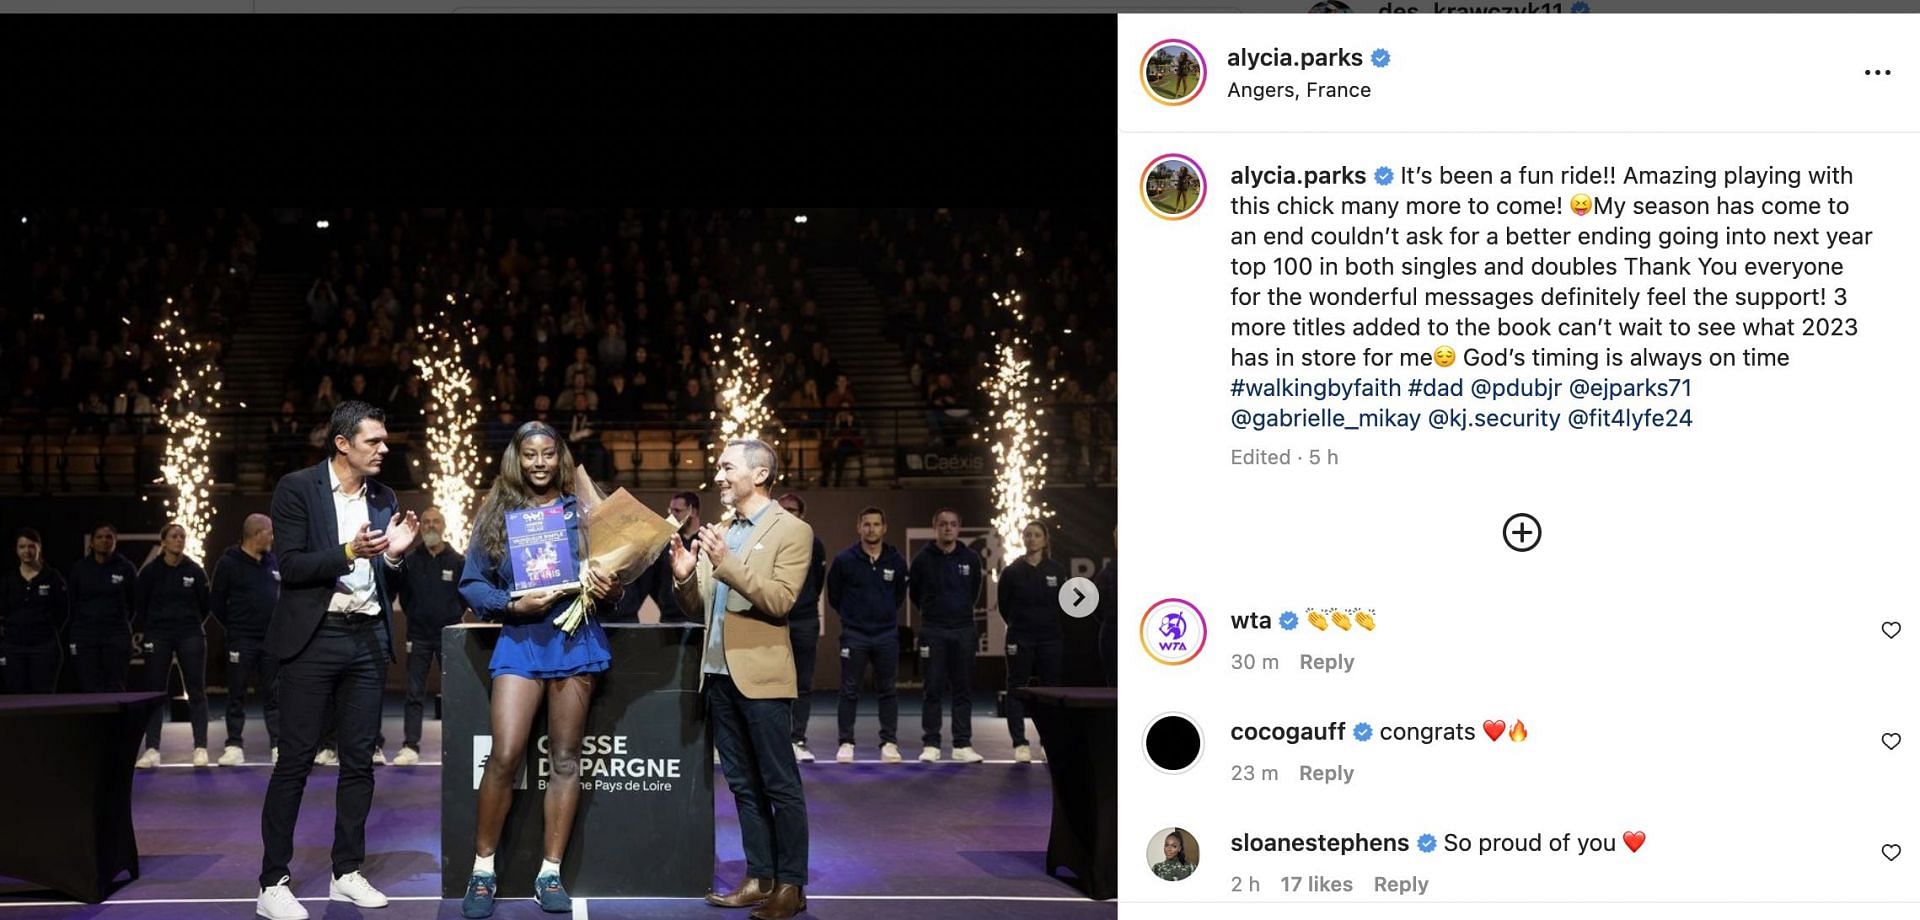 Coco Gauff and Sloane Stephens congratulated Alycia Parks